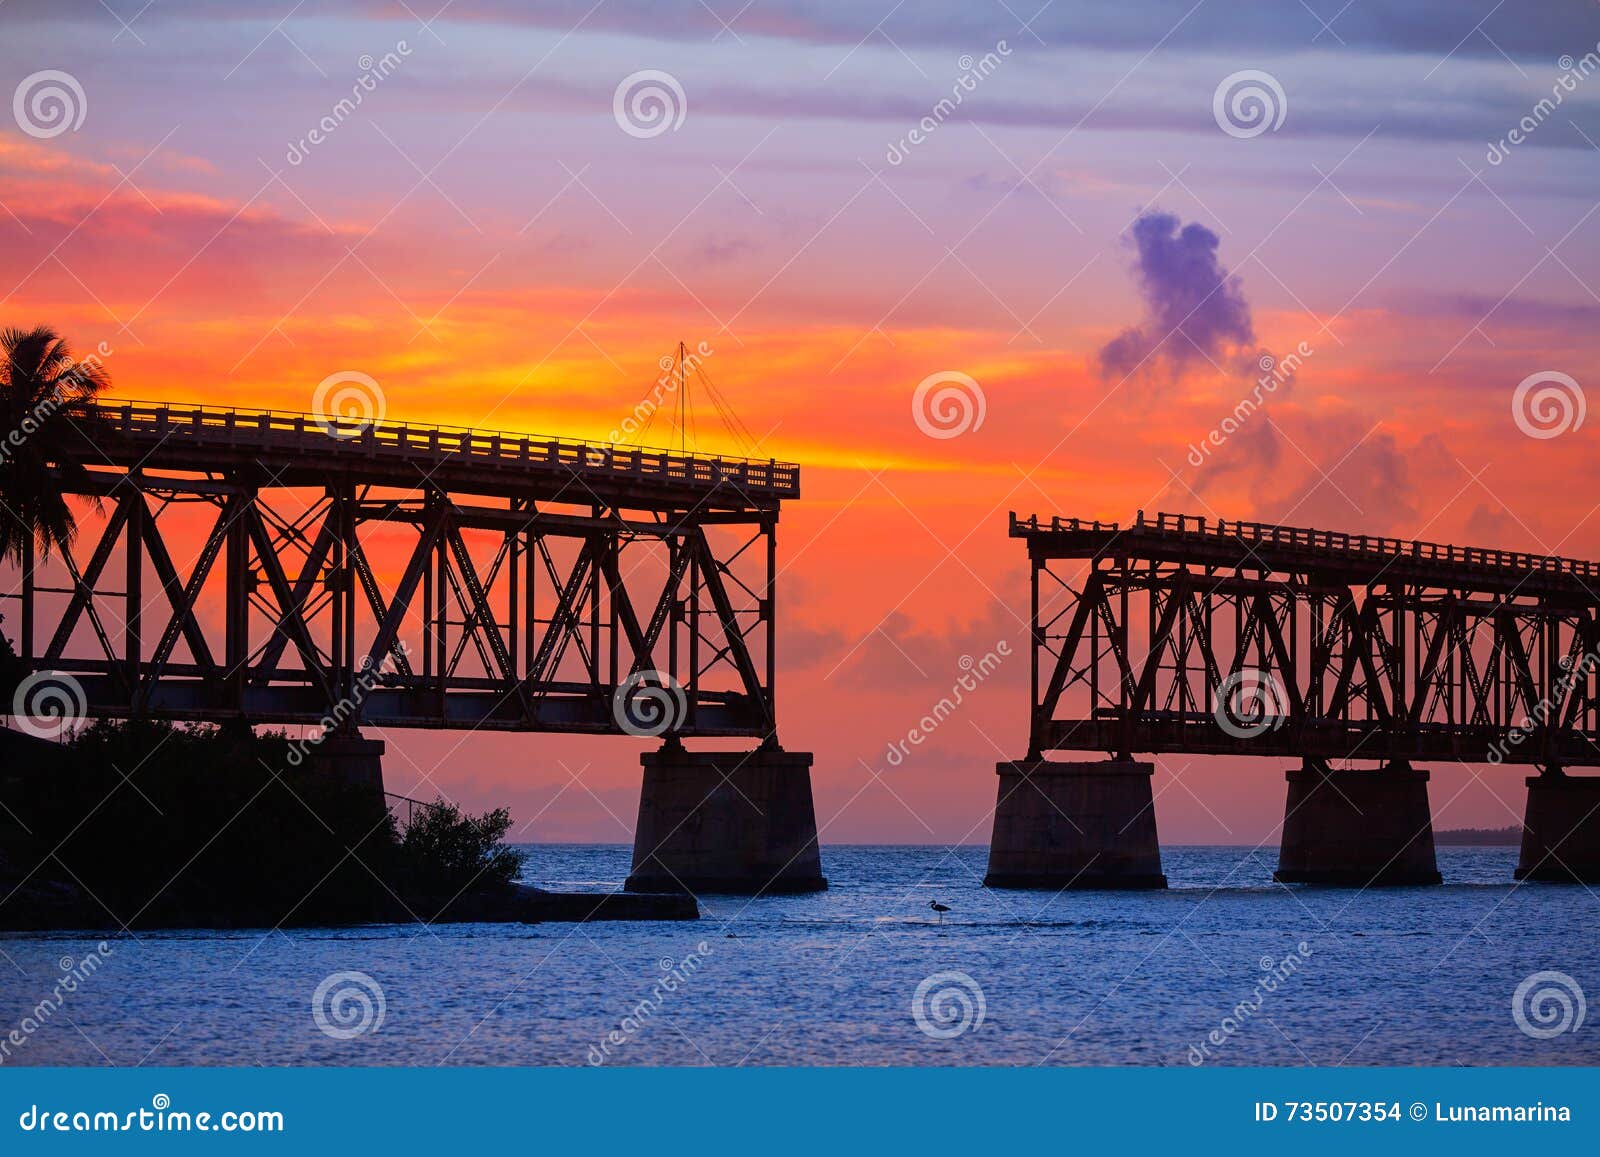 florida keys old bridge sunset at bahia honda